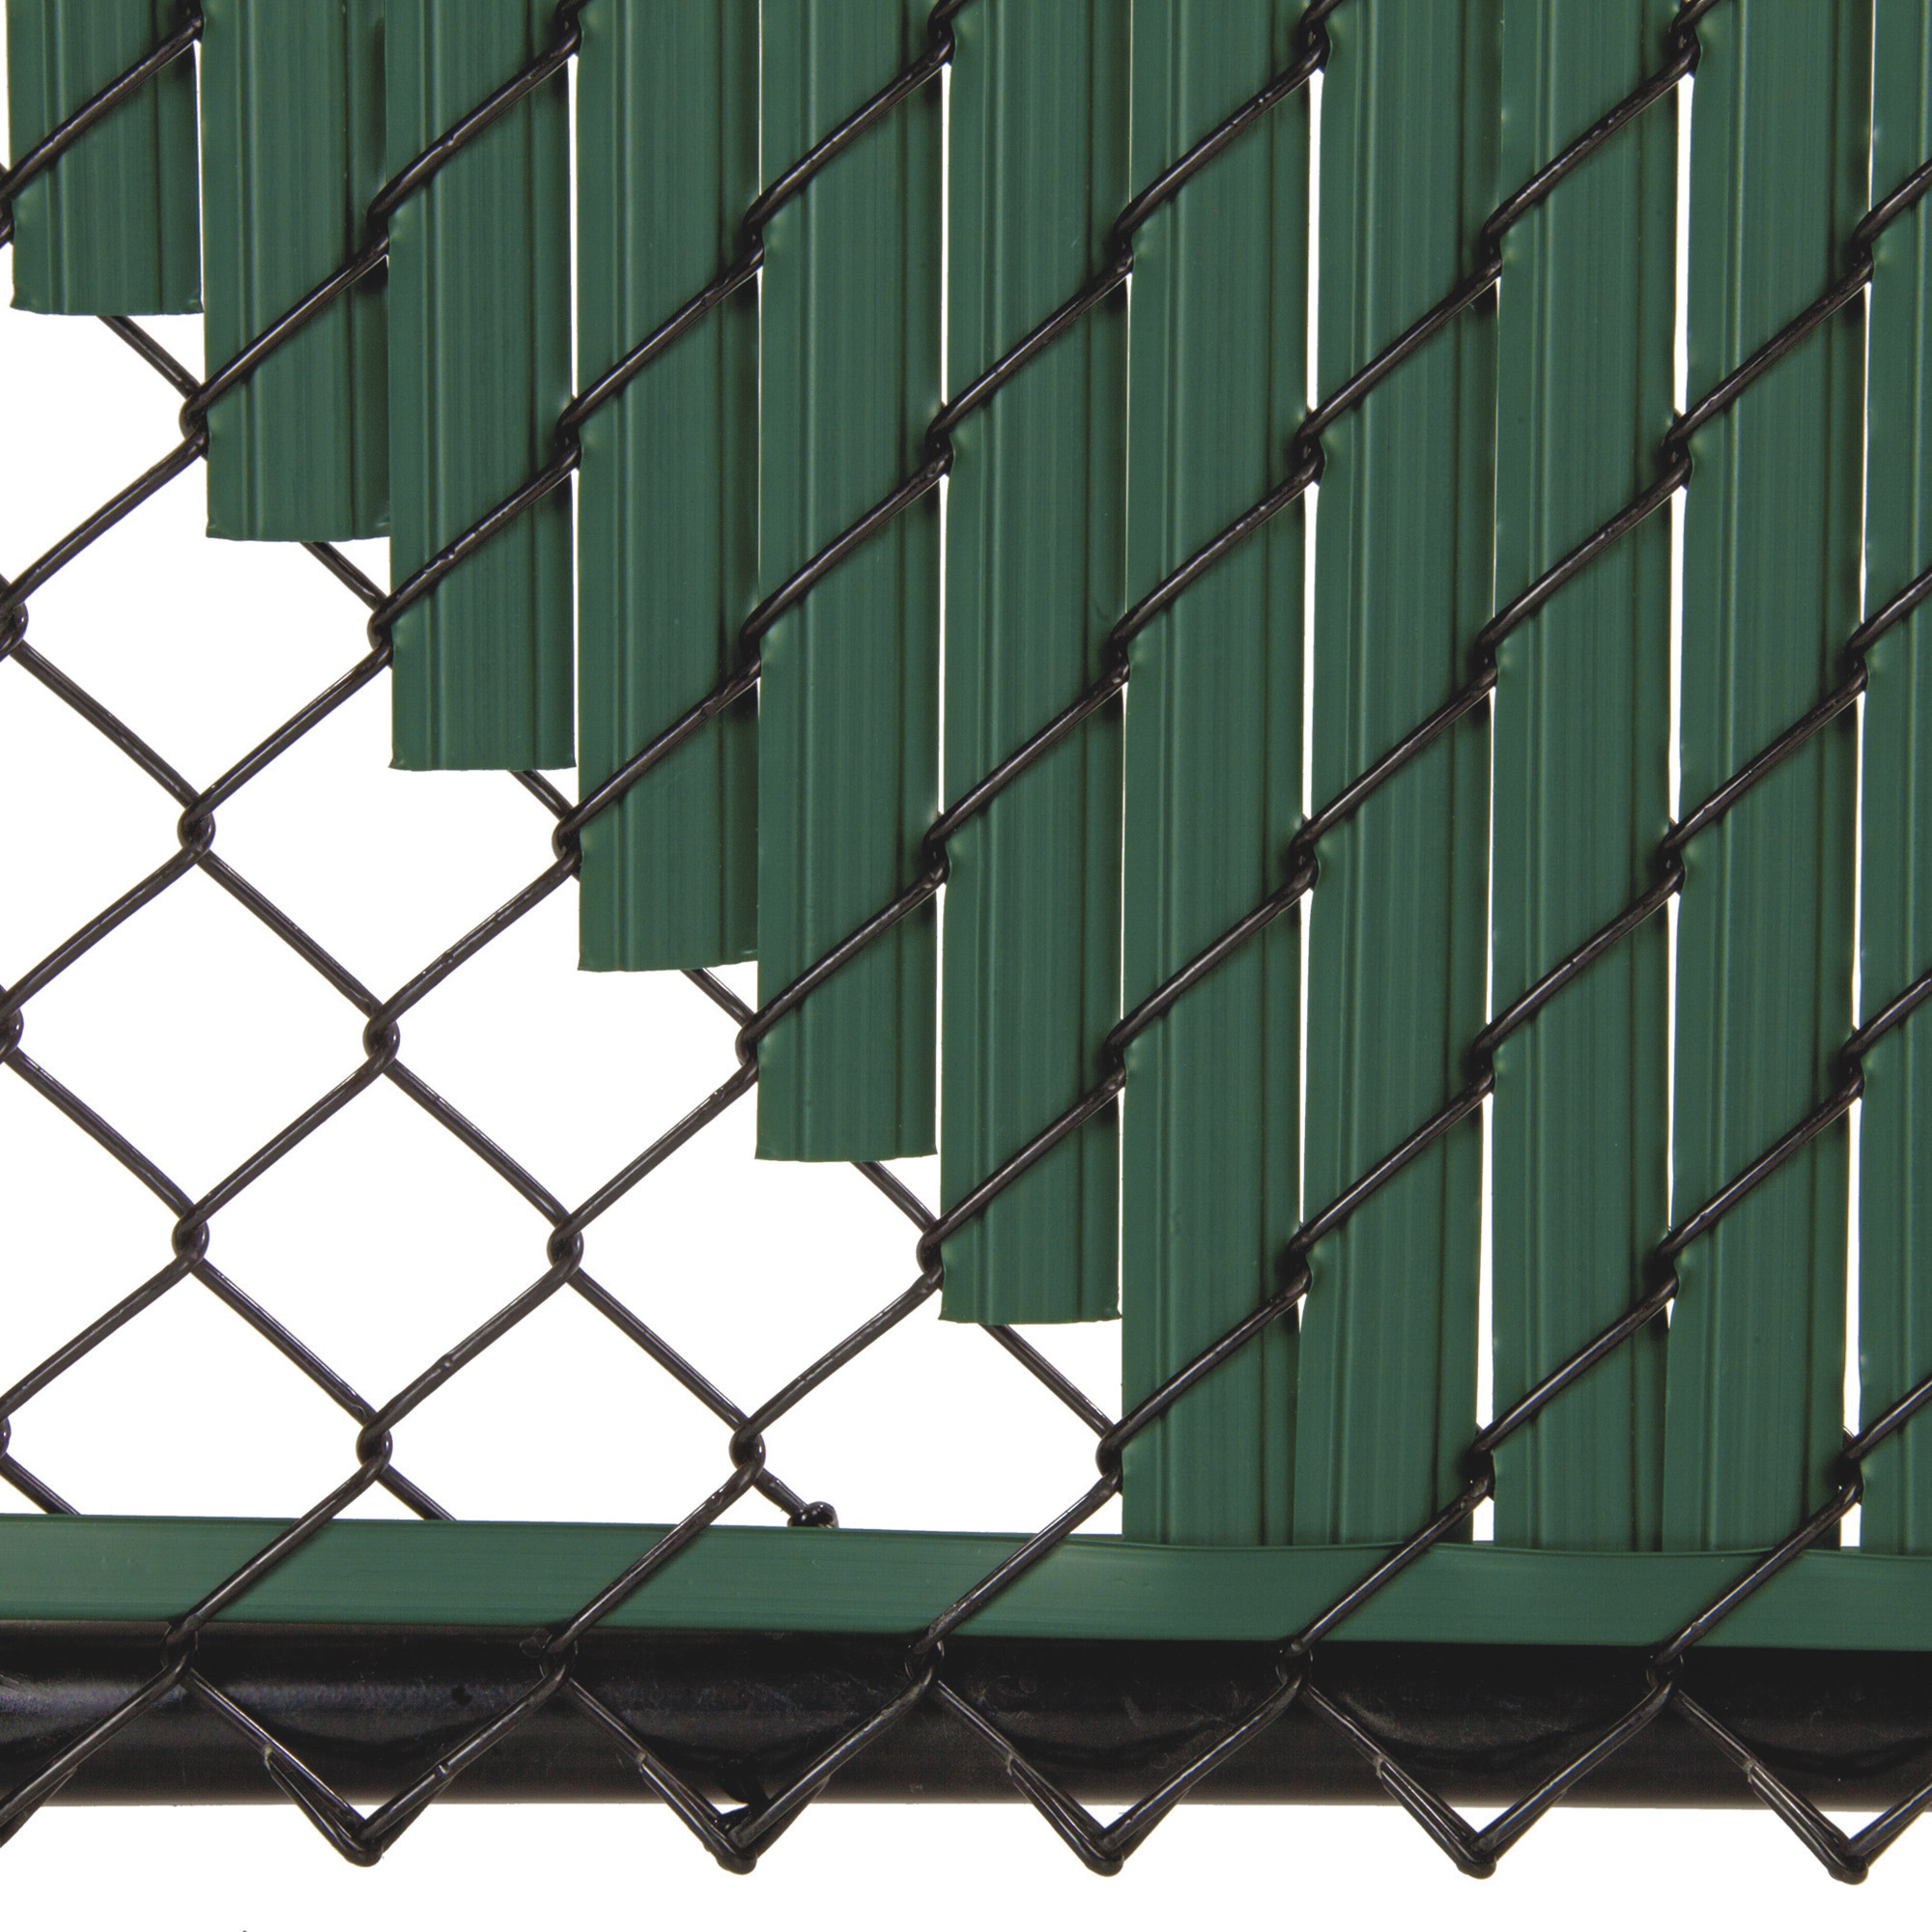 SoliTube Slats Chain Link Fence Privacy Slats â Green, 82 Slats, Model SS5GN